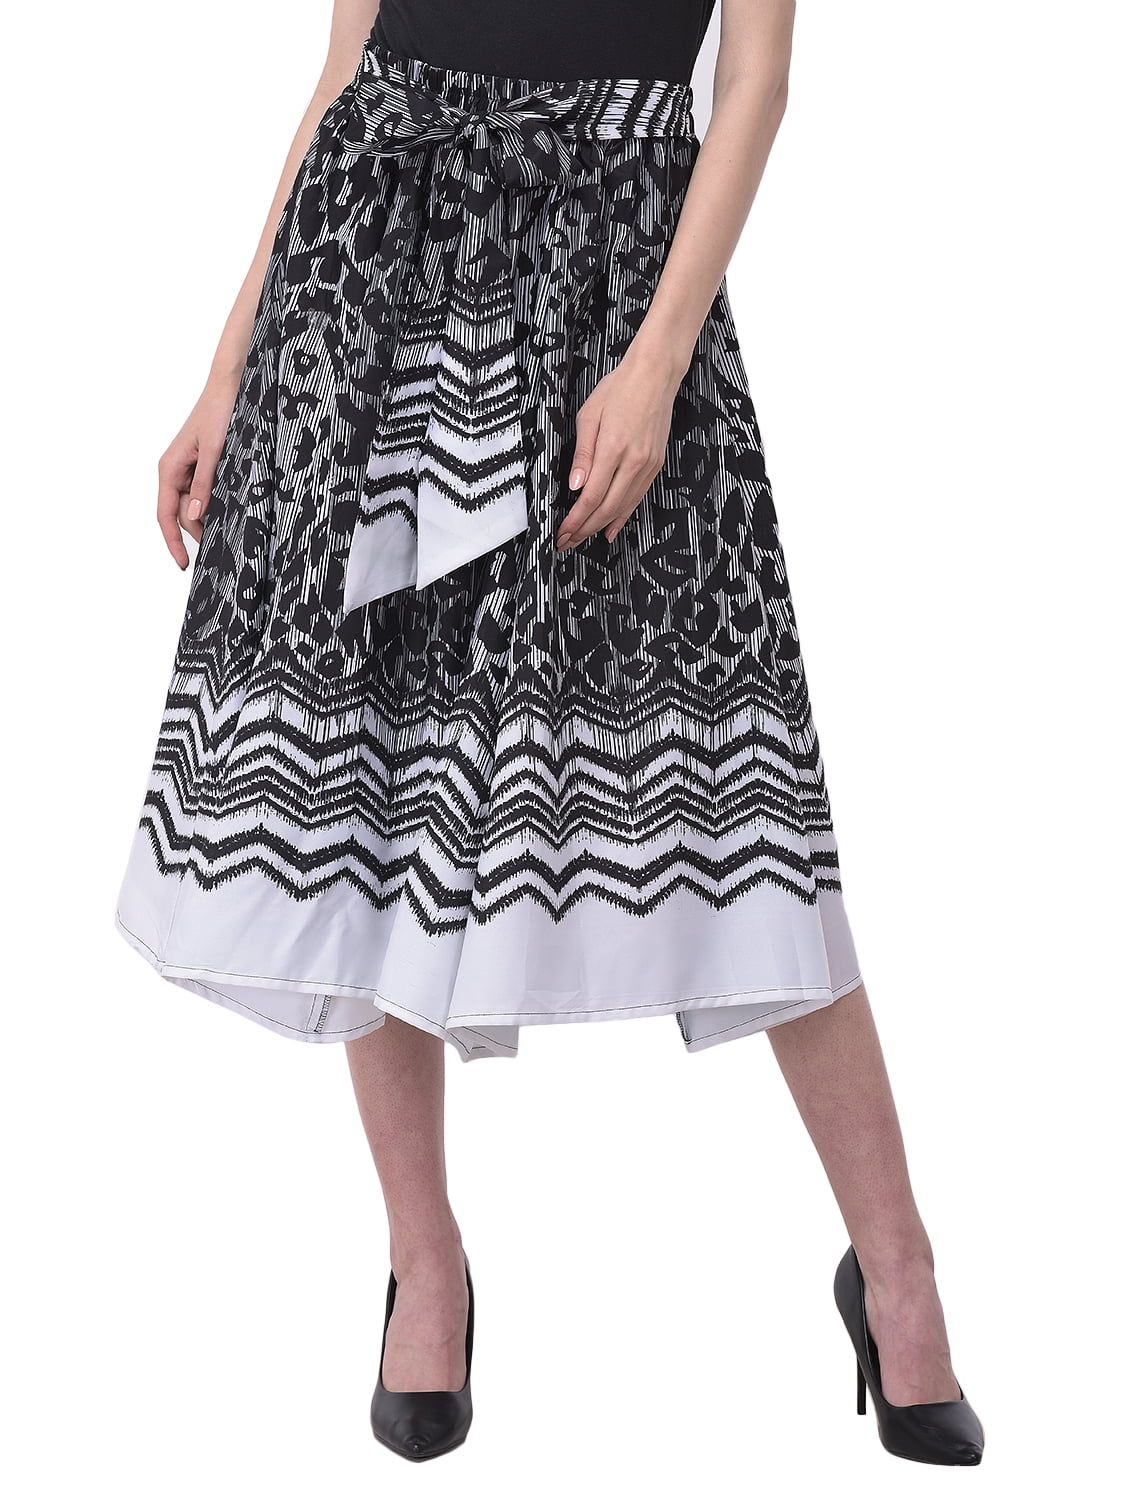 Women Skirts Geometric A Line Midi Skirt for Ladies Knee Length Skirts Comfortable Casual Office Wear Online 41df20de 0200 47c9 8436 45480bec3ff0.c12f45a37bf0a43b4b950ddb2b775750